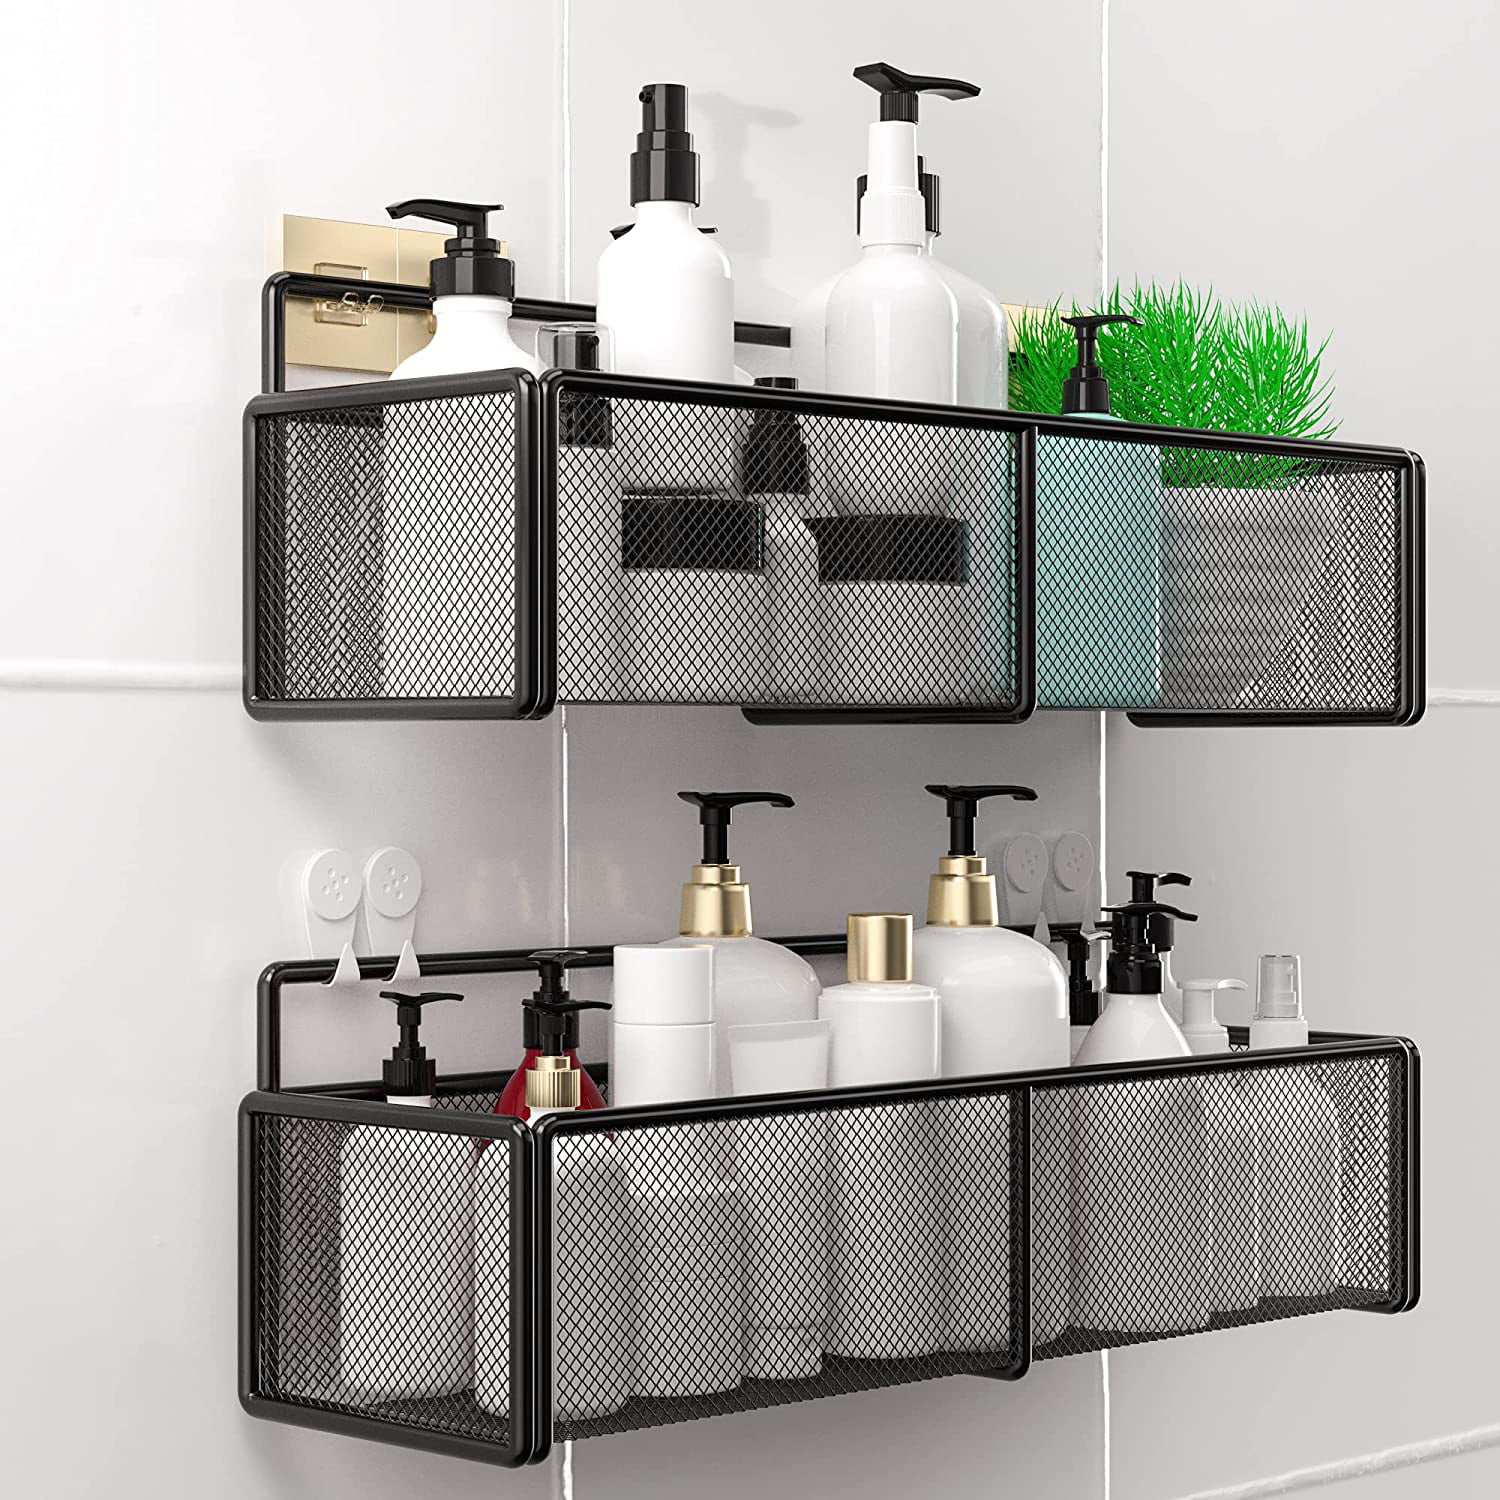 Caddy Bathroom Adhesive Storage Rack Shelf Organizer Basket Stainless Steel 